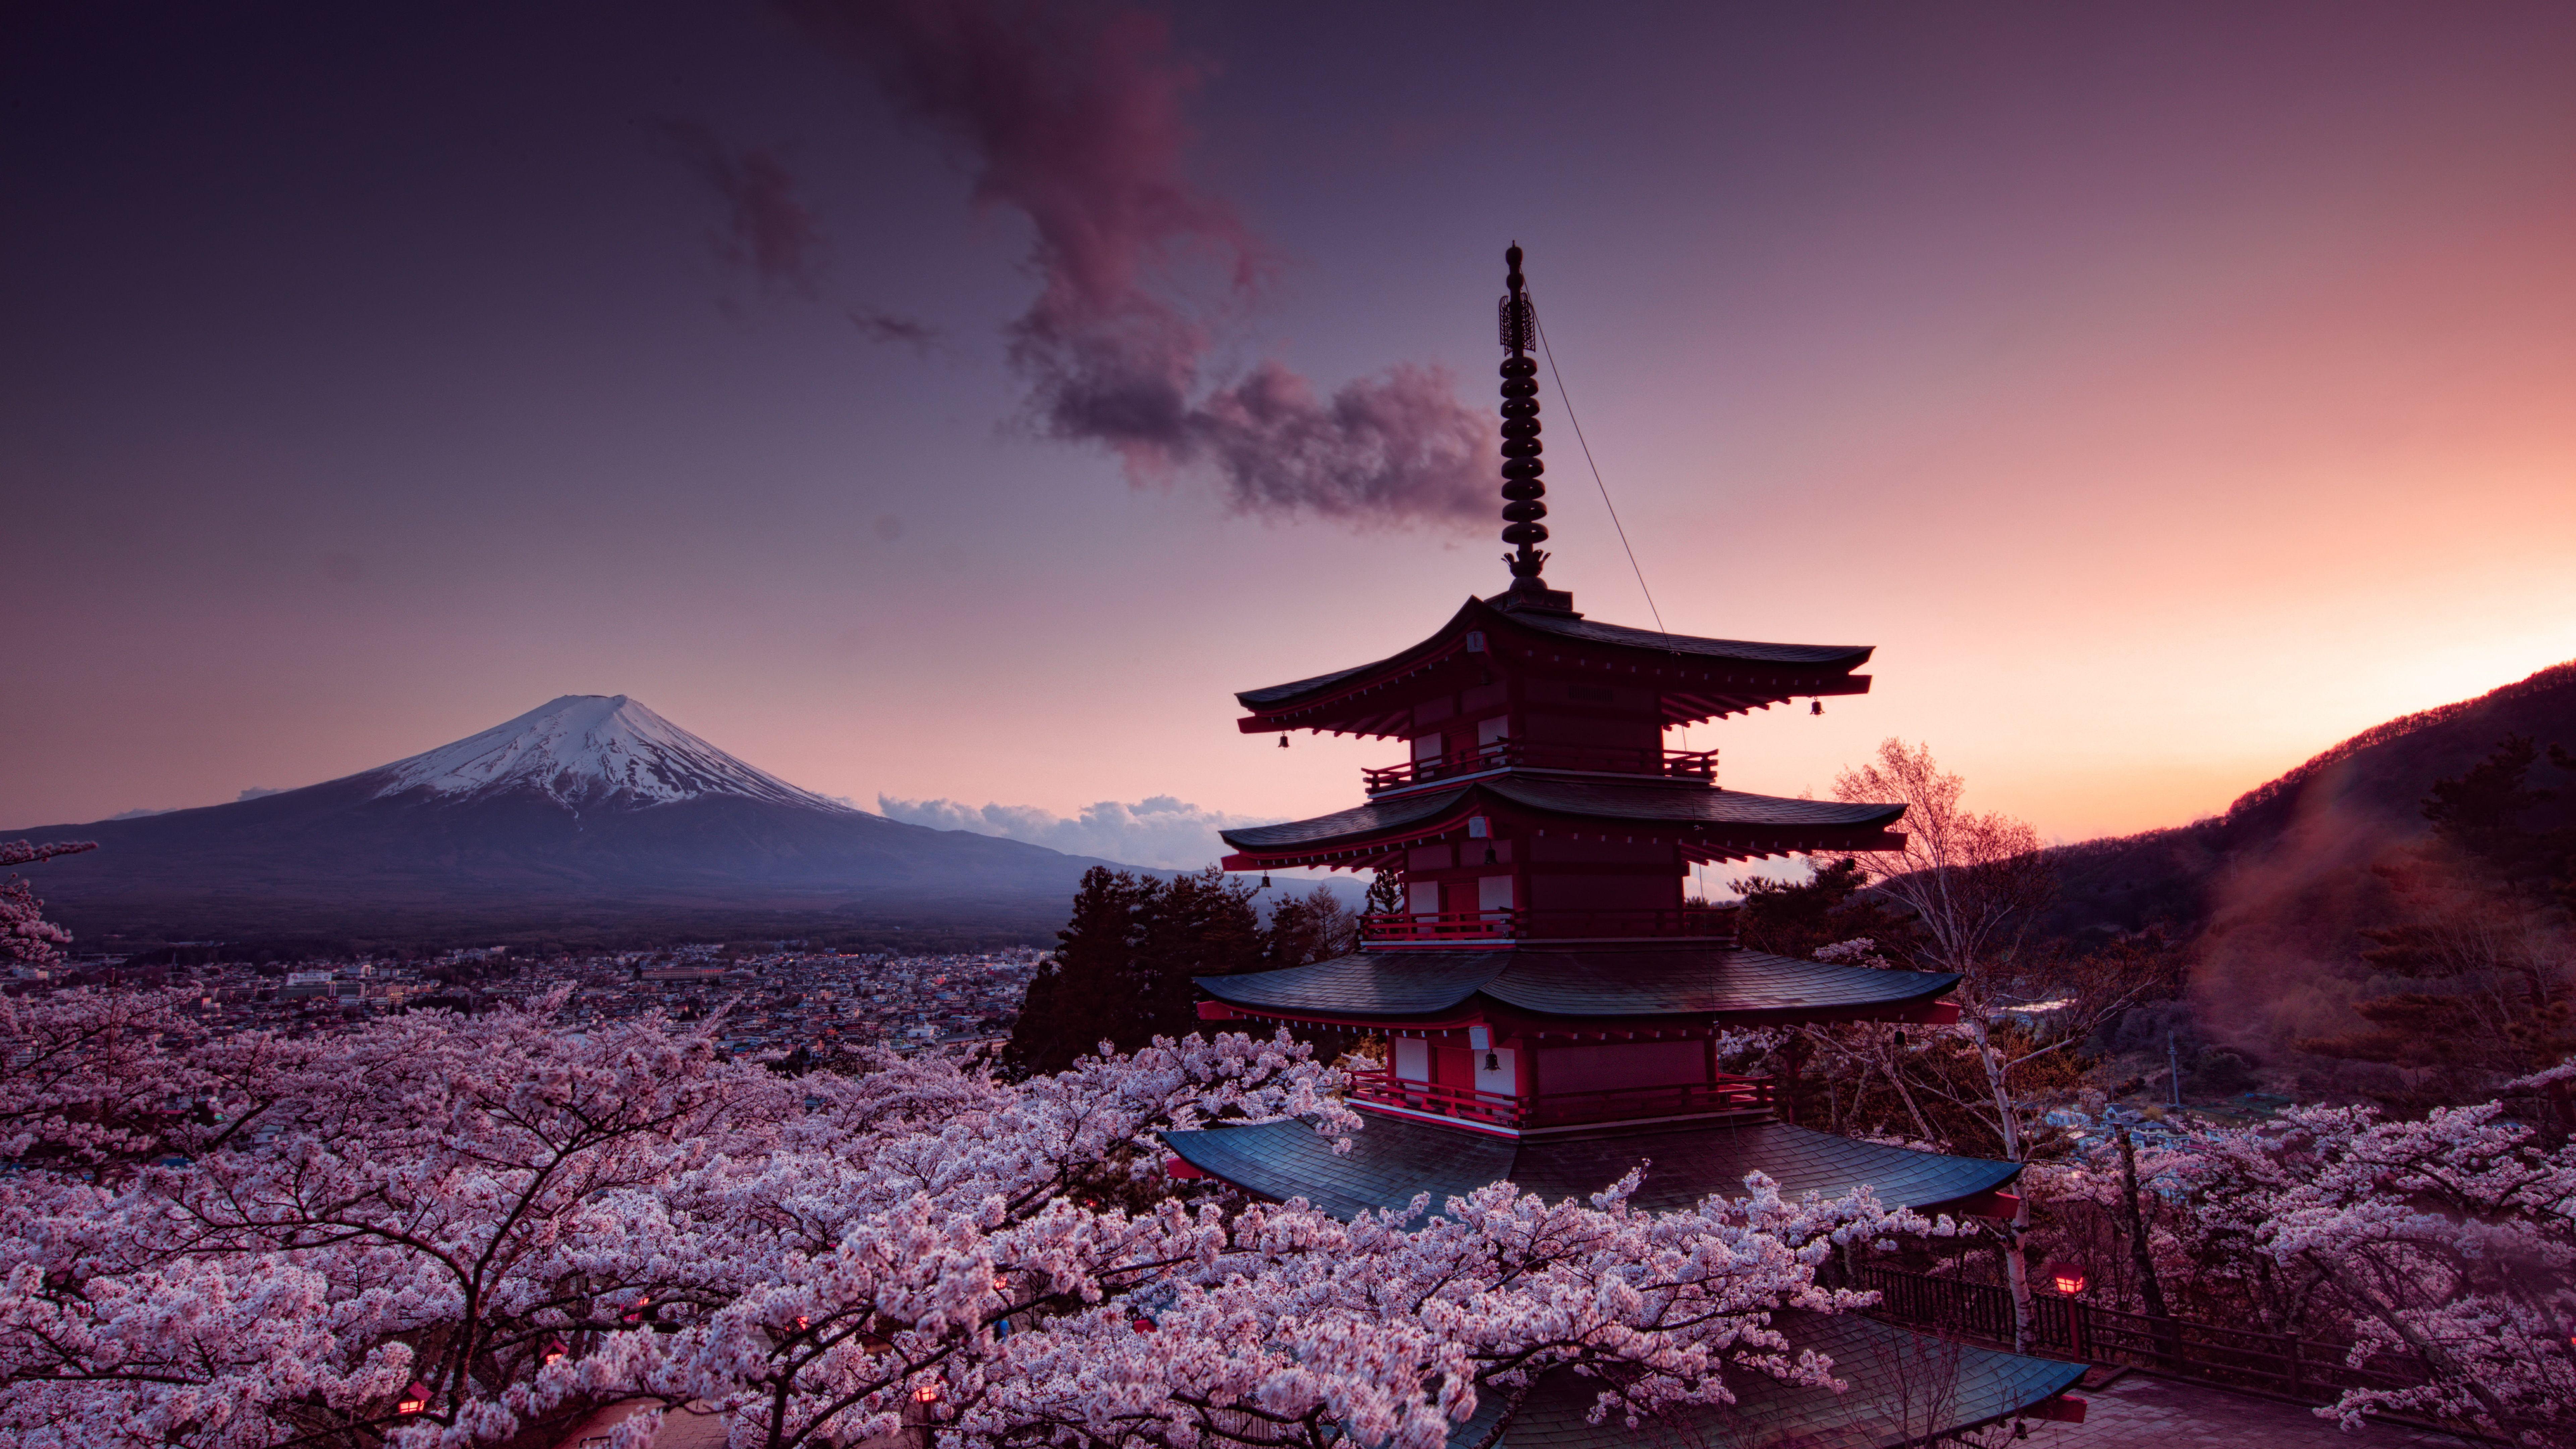 Churei Tower Mount Fuji In Japan 8k 8k HD 4k Wallpaper